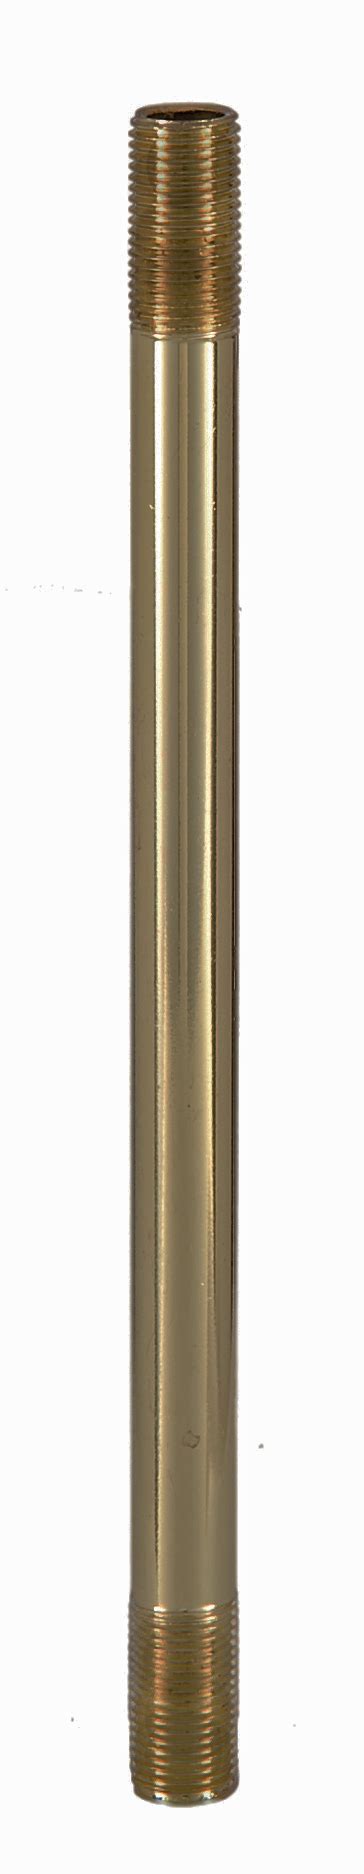 Get the best deals on industrial threaded rods & threaded studs. B&P Lamp Solid Brass 1/8IP Steel Threaded Rod | eBay